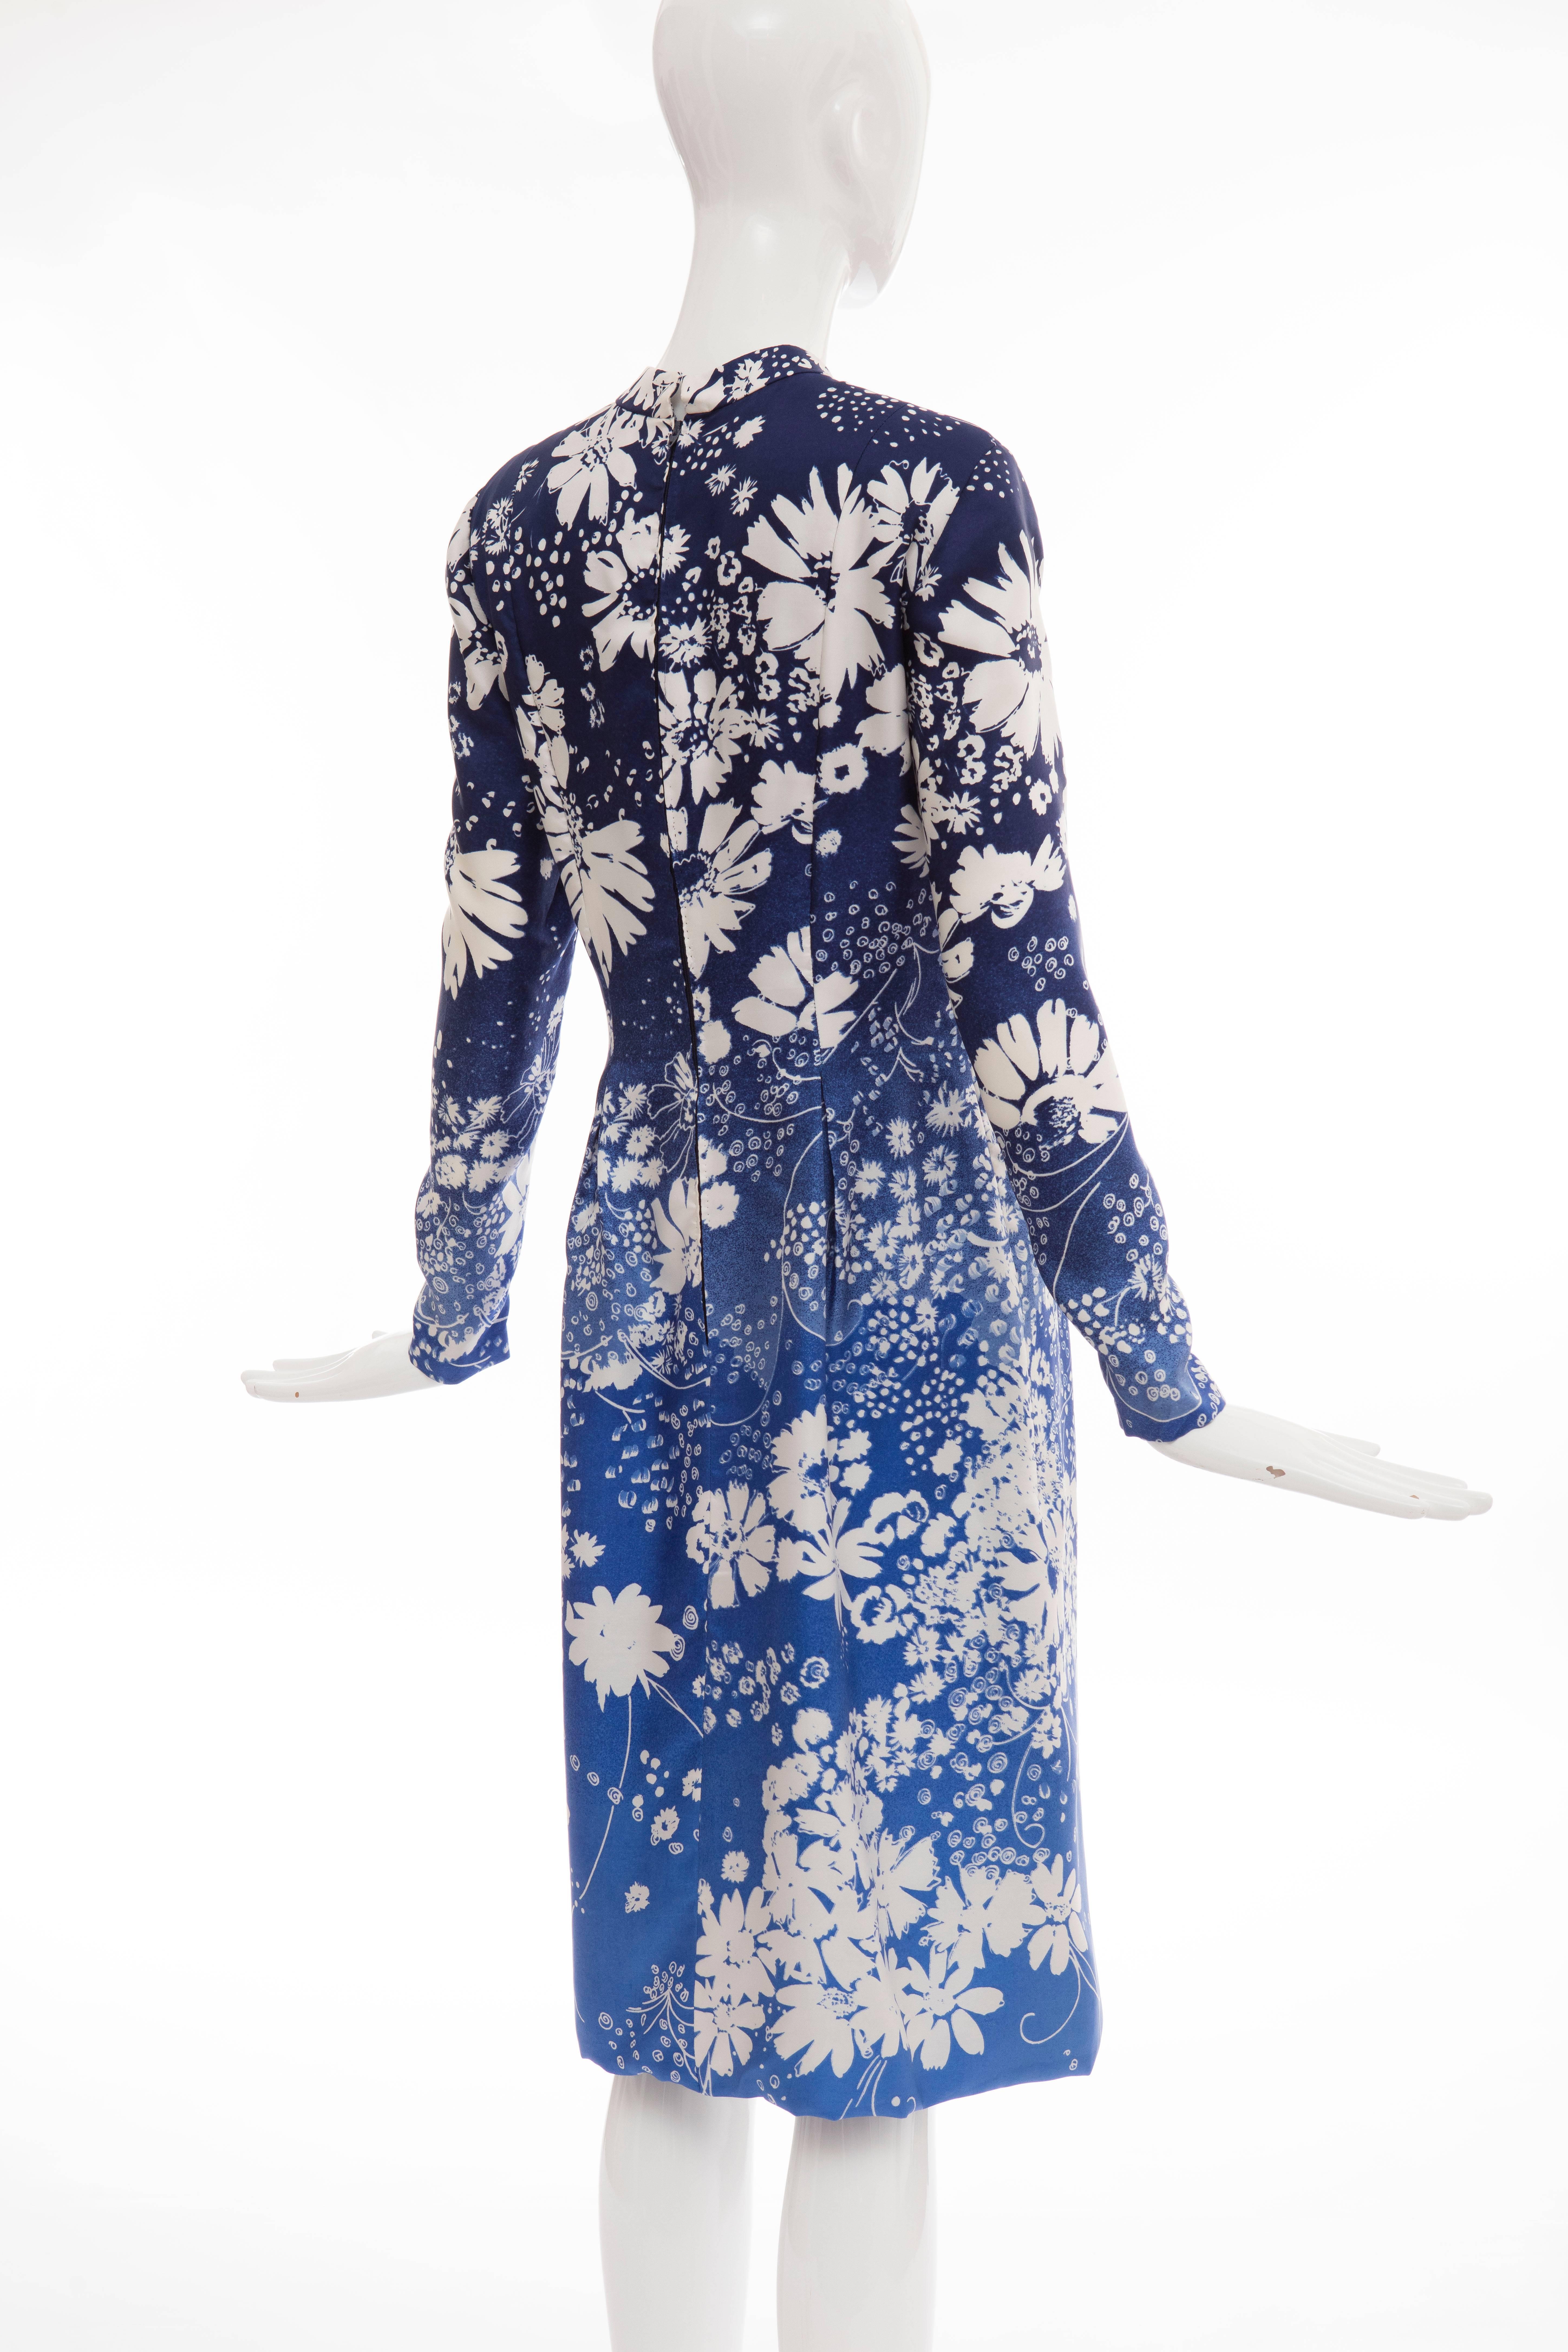 Pauline Trigere Navy Blue Ombre Silk Floral Long Sleeve Dress, Circa 1980's 3